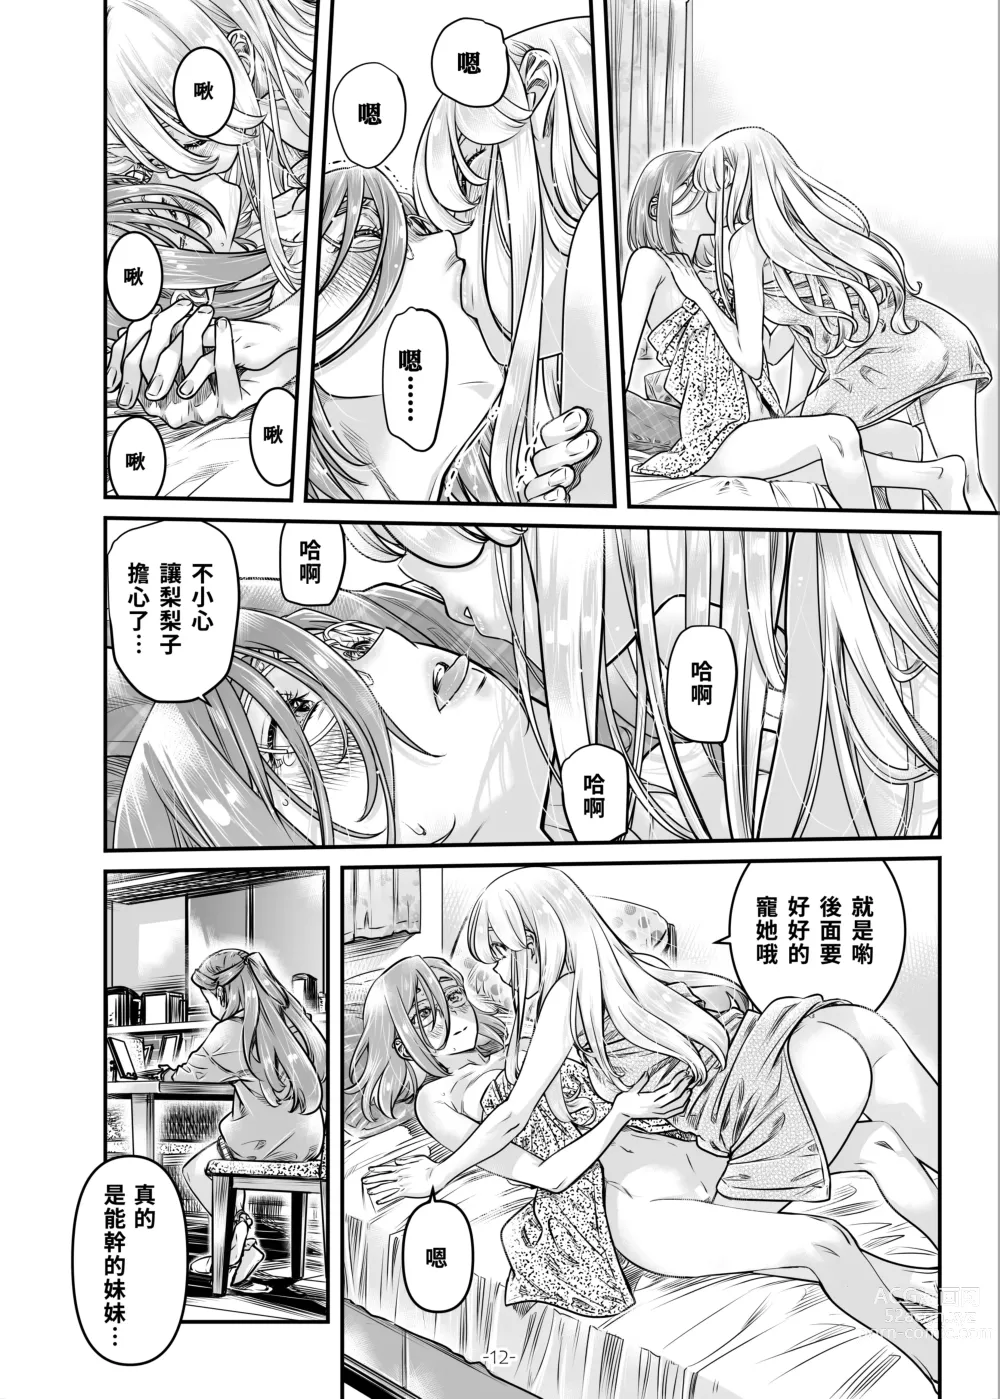 Page 13 of doujinshi Nadeshiko Hiyori 2nd season - SERIES of GIRLs LOE STORY ~episode 3~